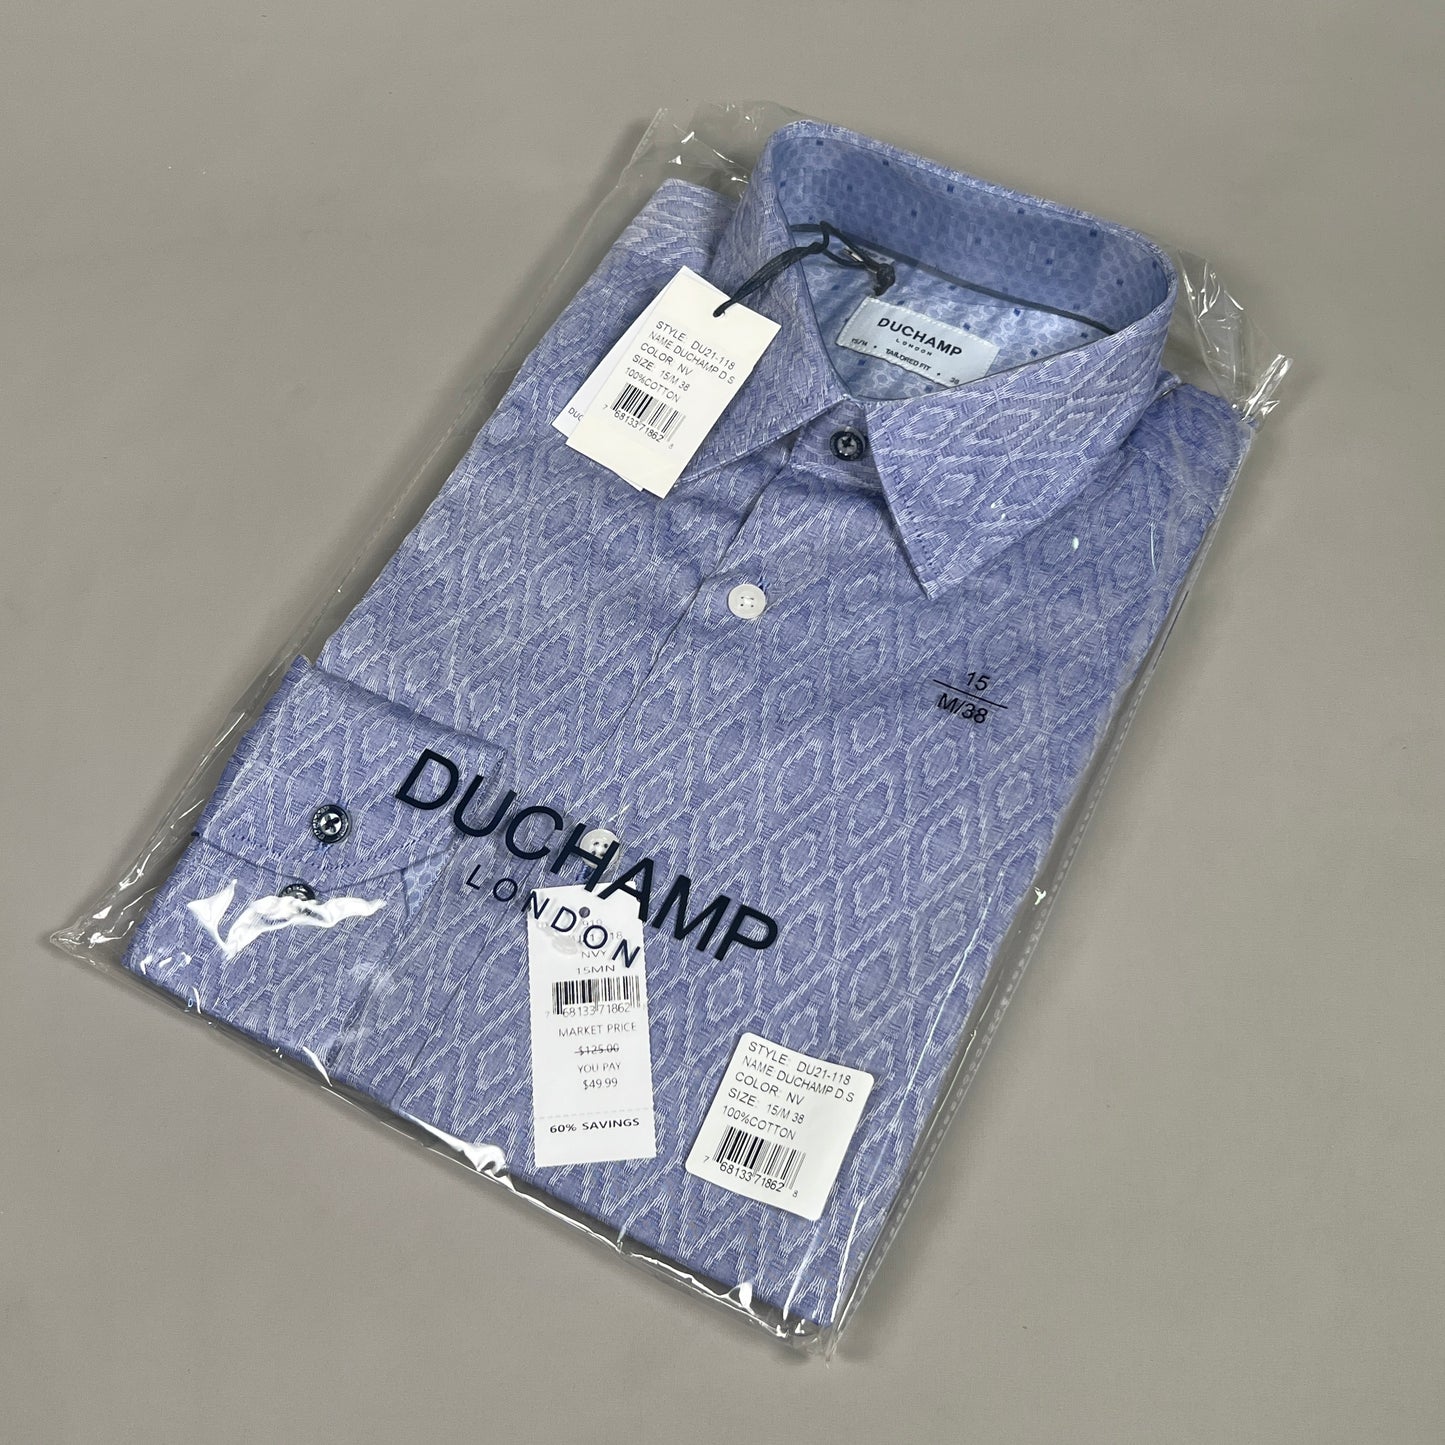 DUCHAMP LONDON Blue Tailored-fit Geometric-print Dress Shirt Men's Sz M/38/15 (New)